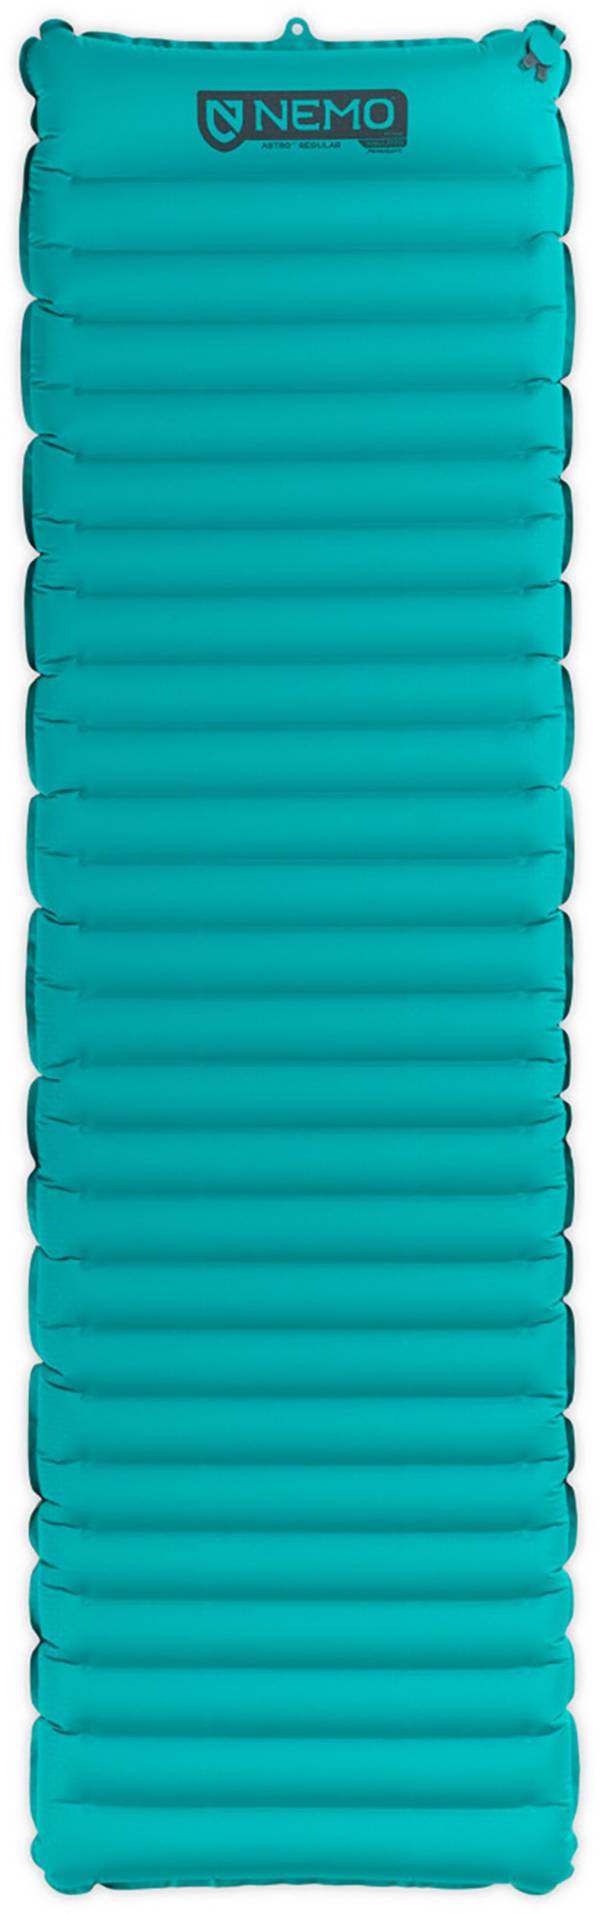 NEMO Astro Insulated Sleeping Pad product image